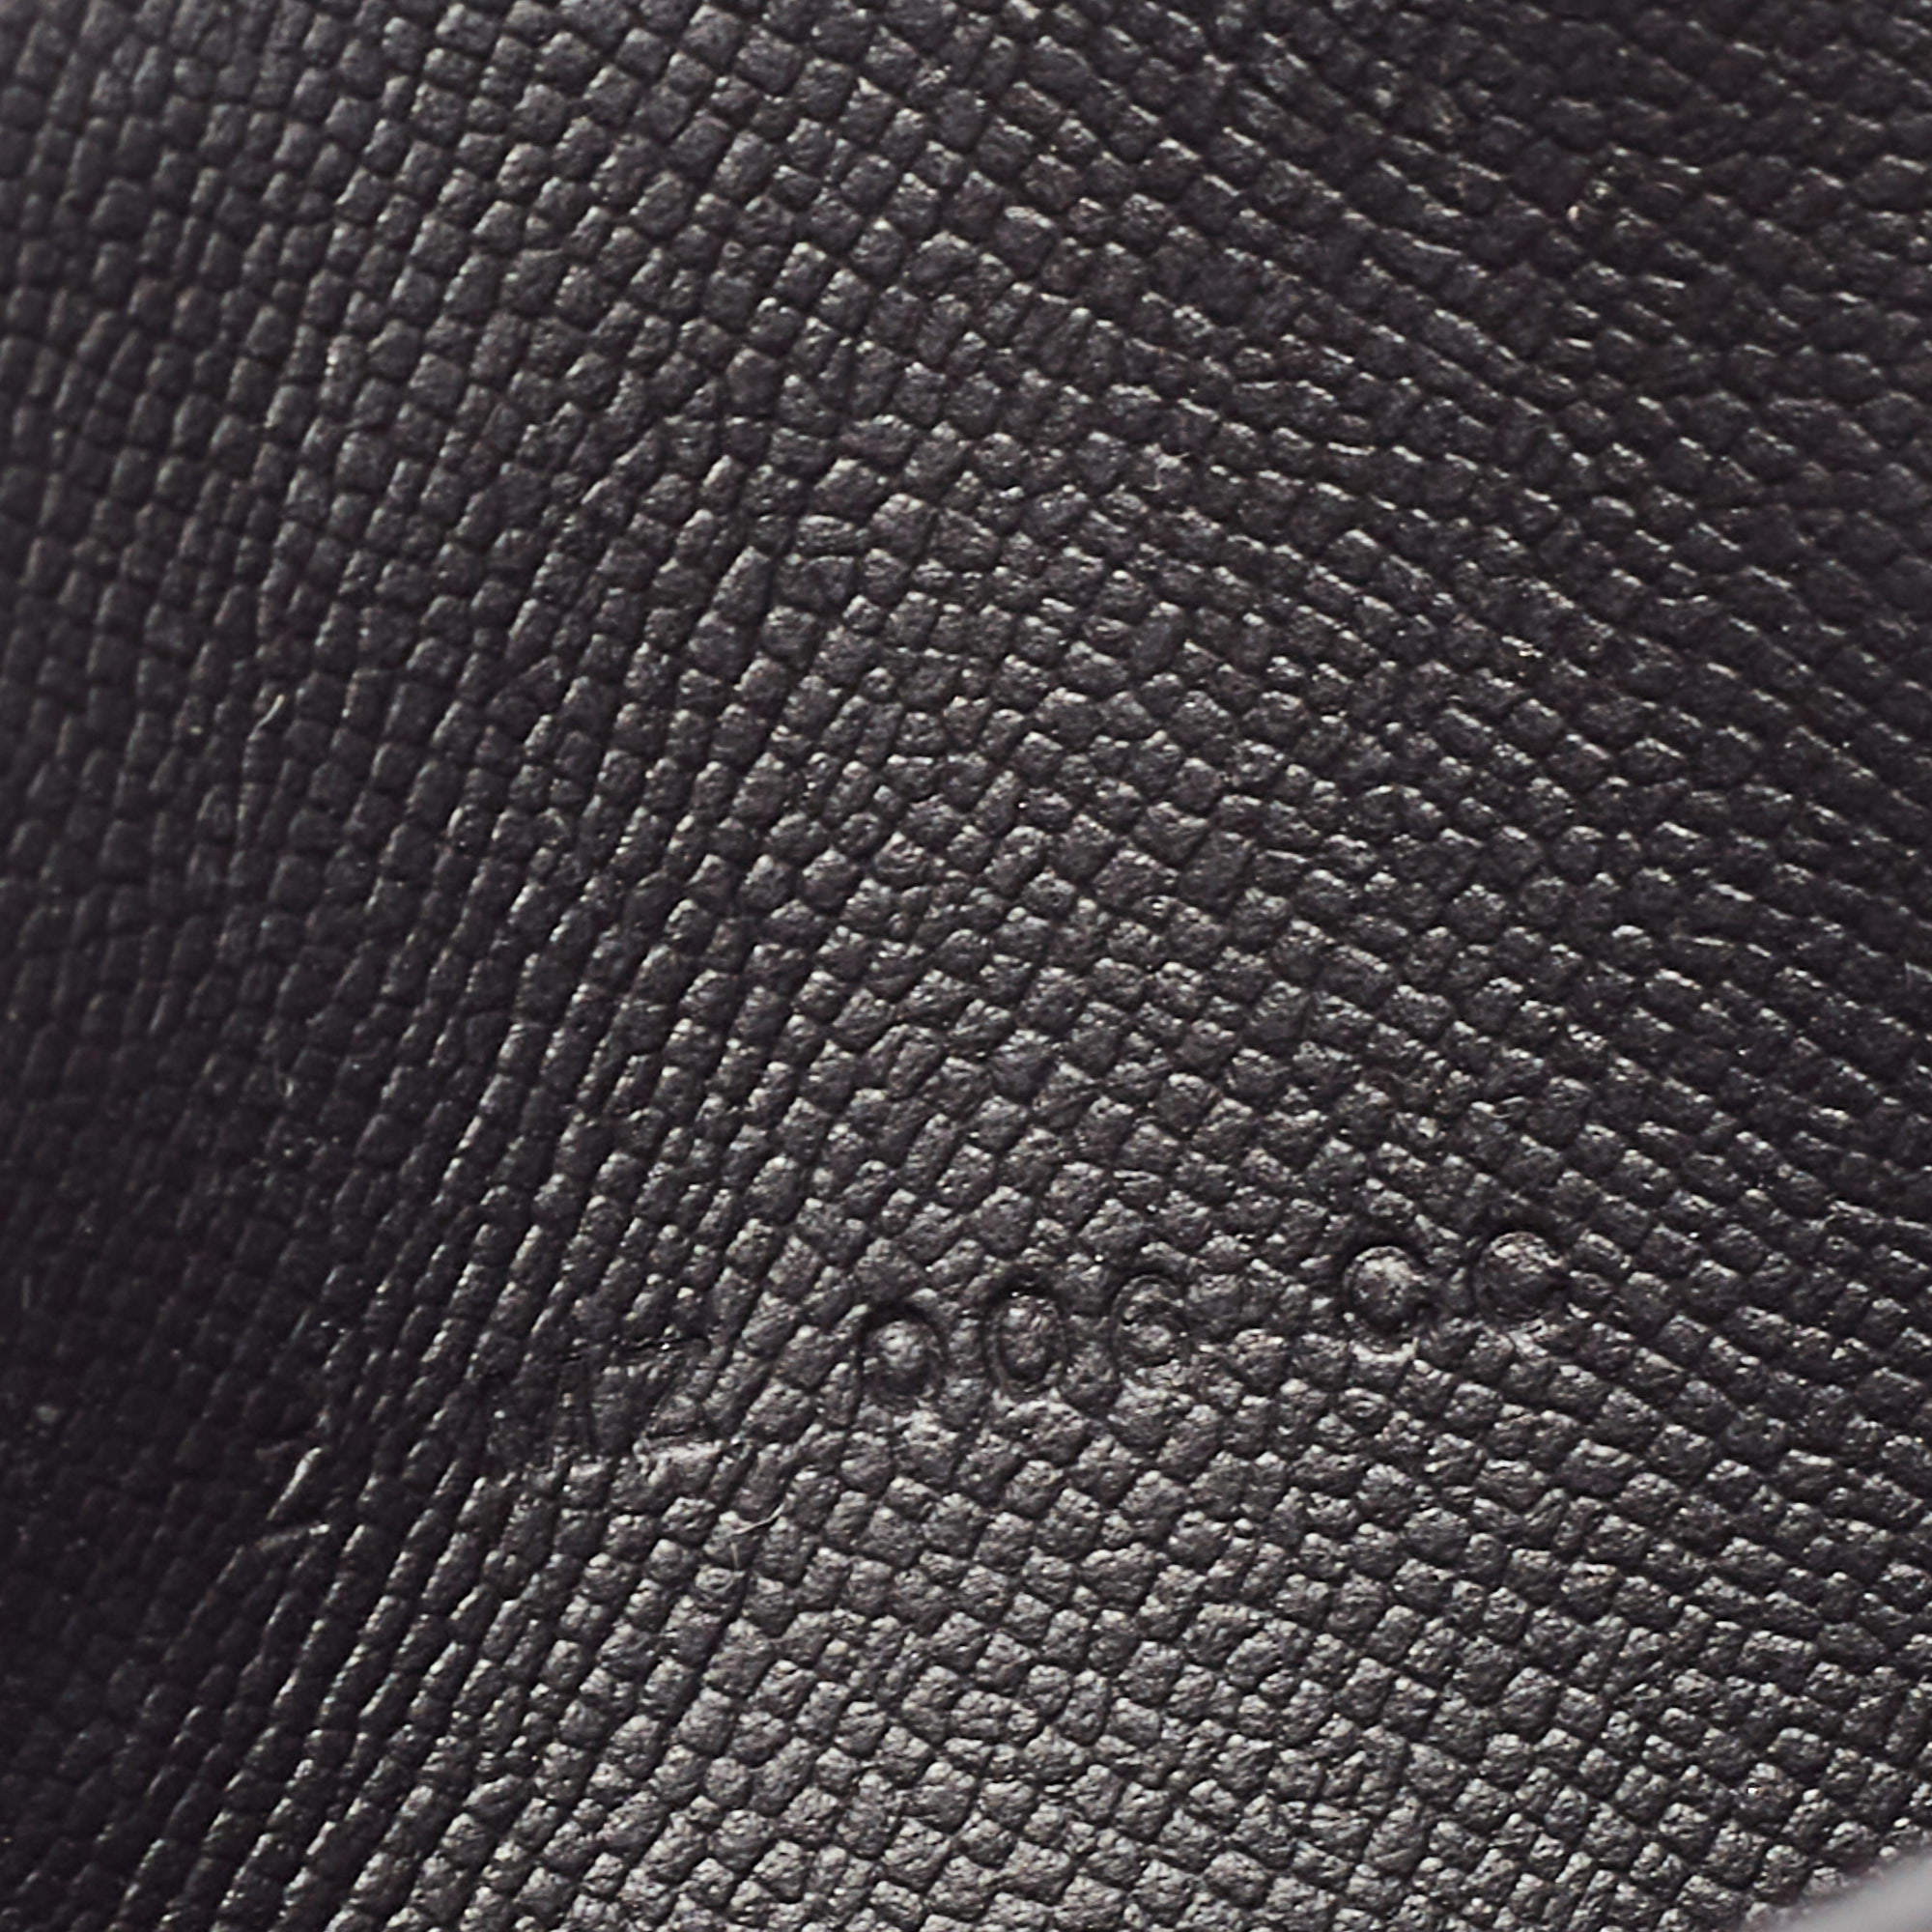 Synthetic Leather Hermes Paris Black Wallet